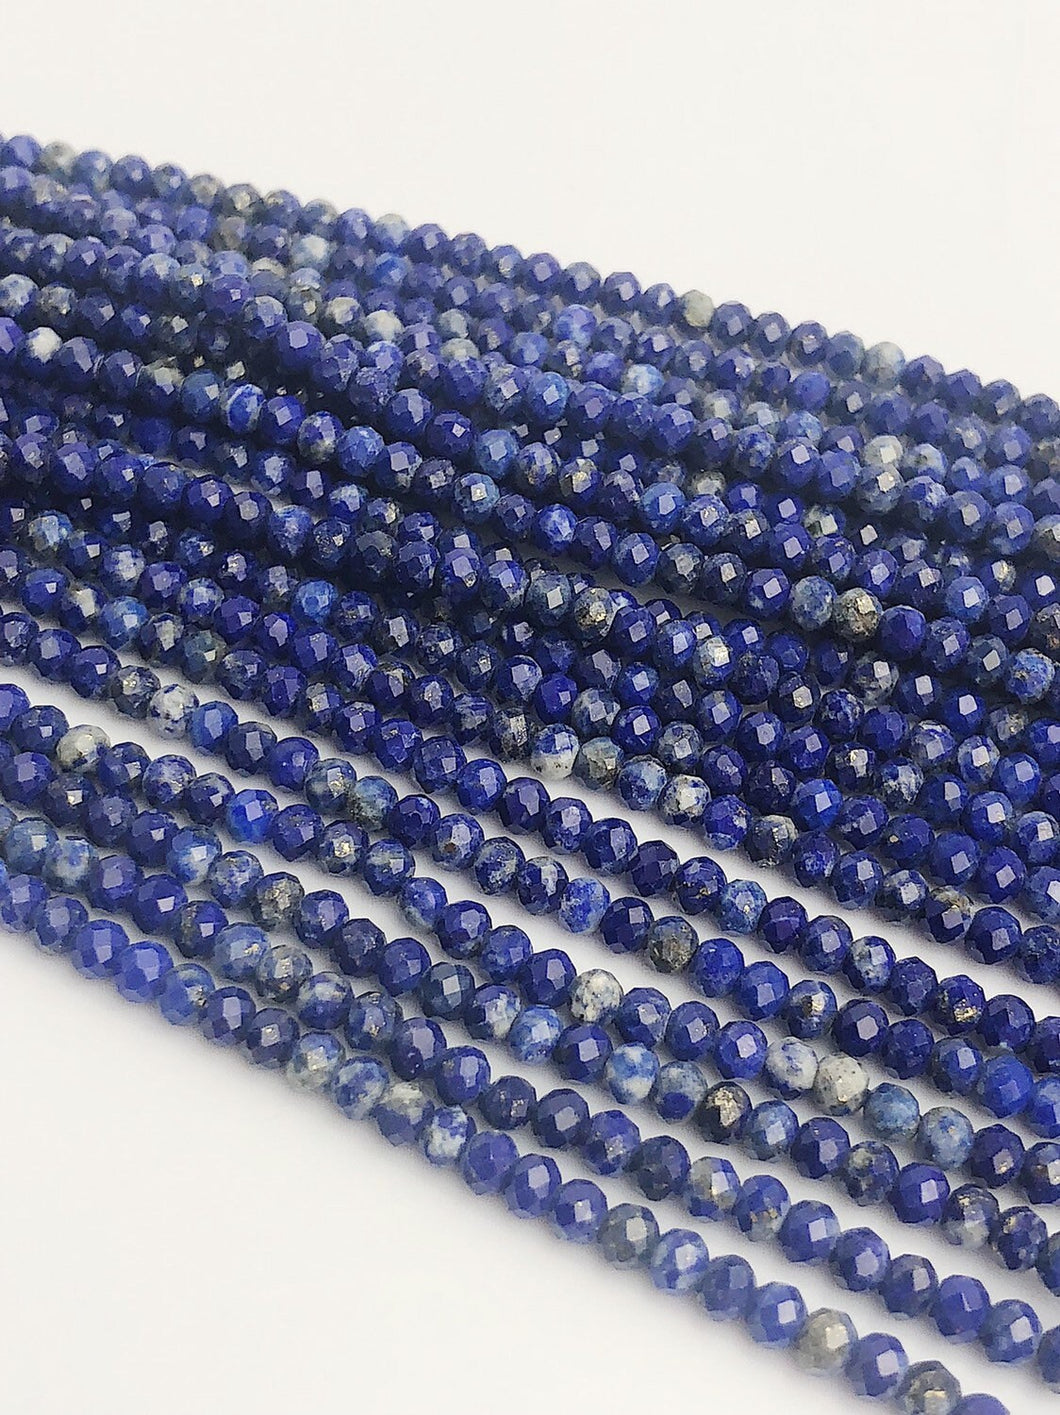 HALF OFF SALE - Blue Lapis Gemstone Beads, Full Strand, Semi Precious Gemstone, 15